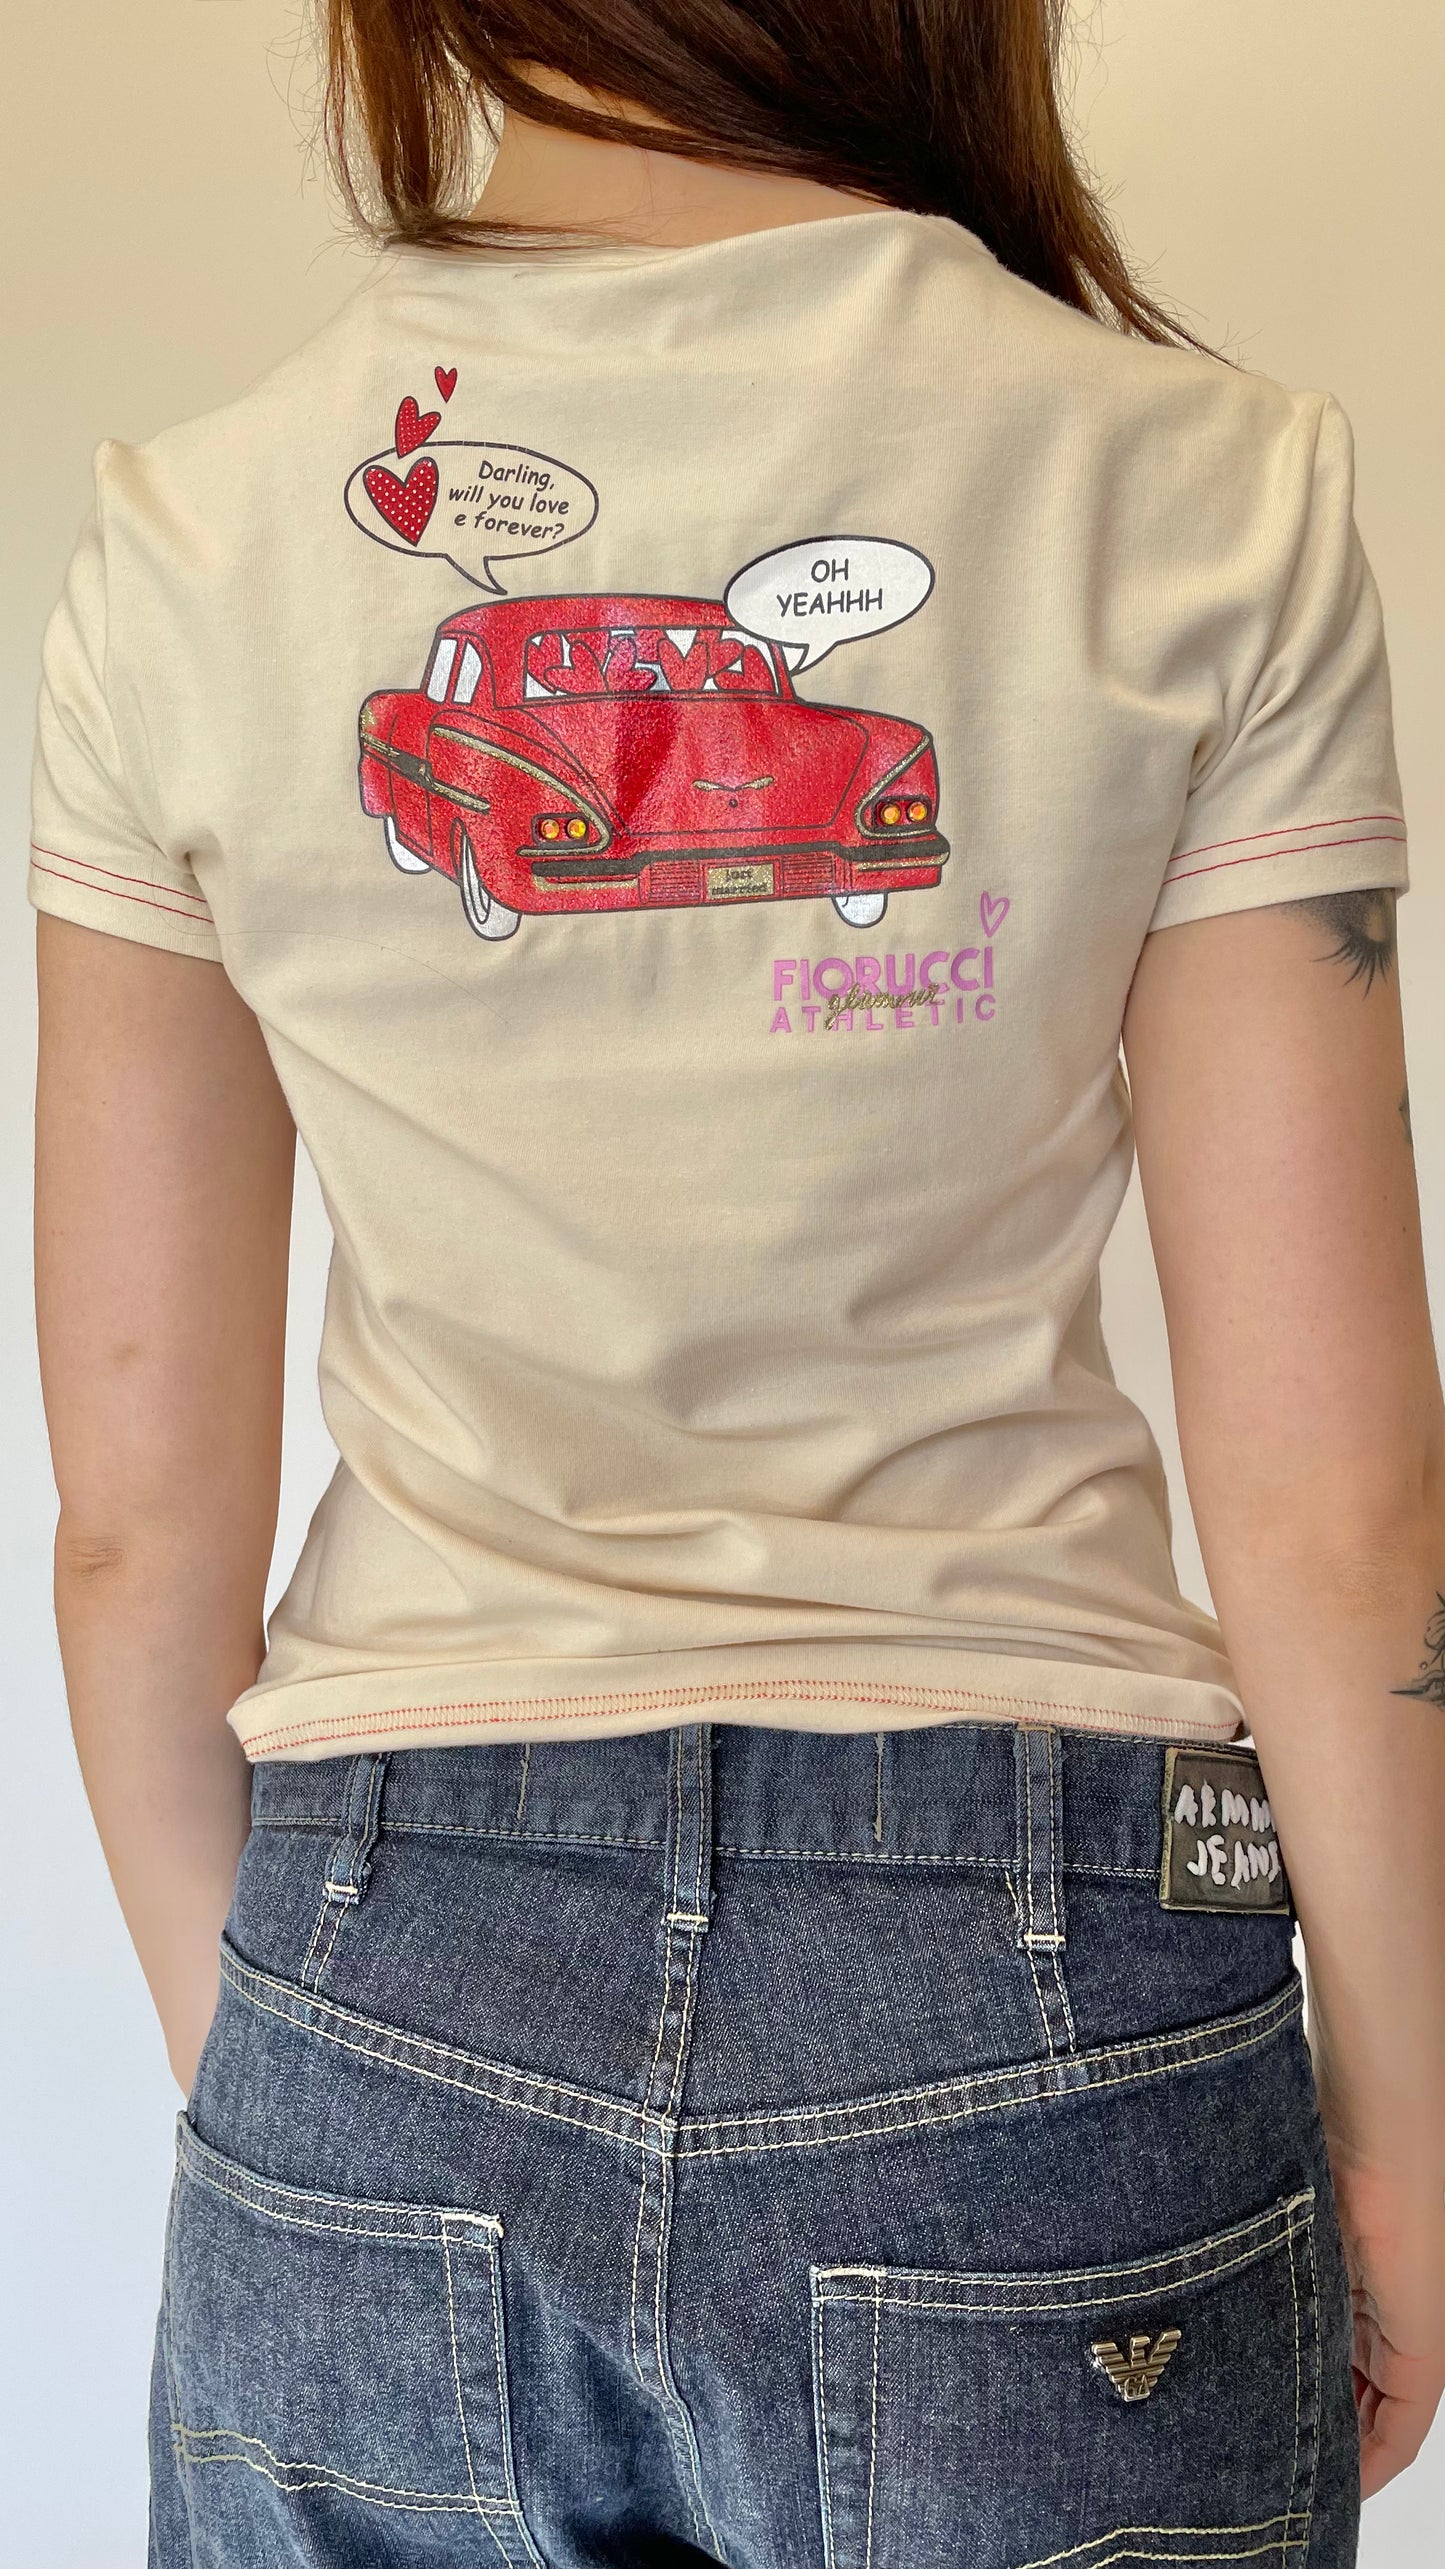 Fiorucci shirt deadstock w/tags (size M)